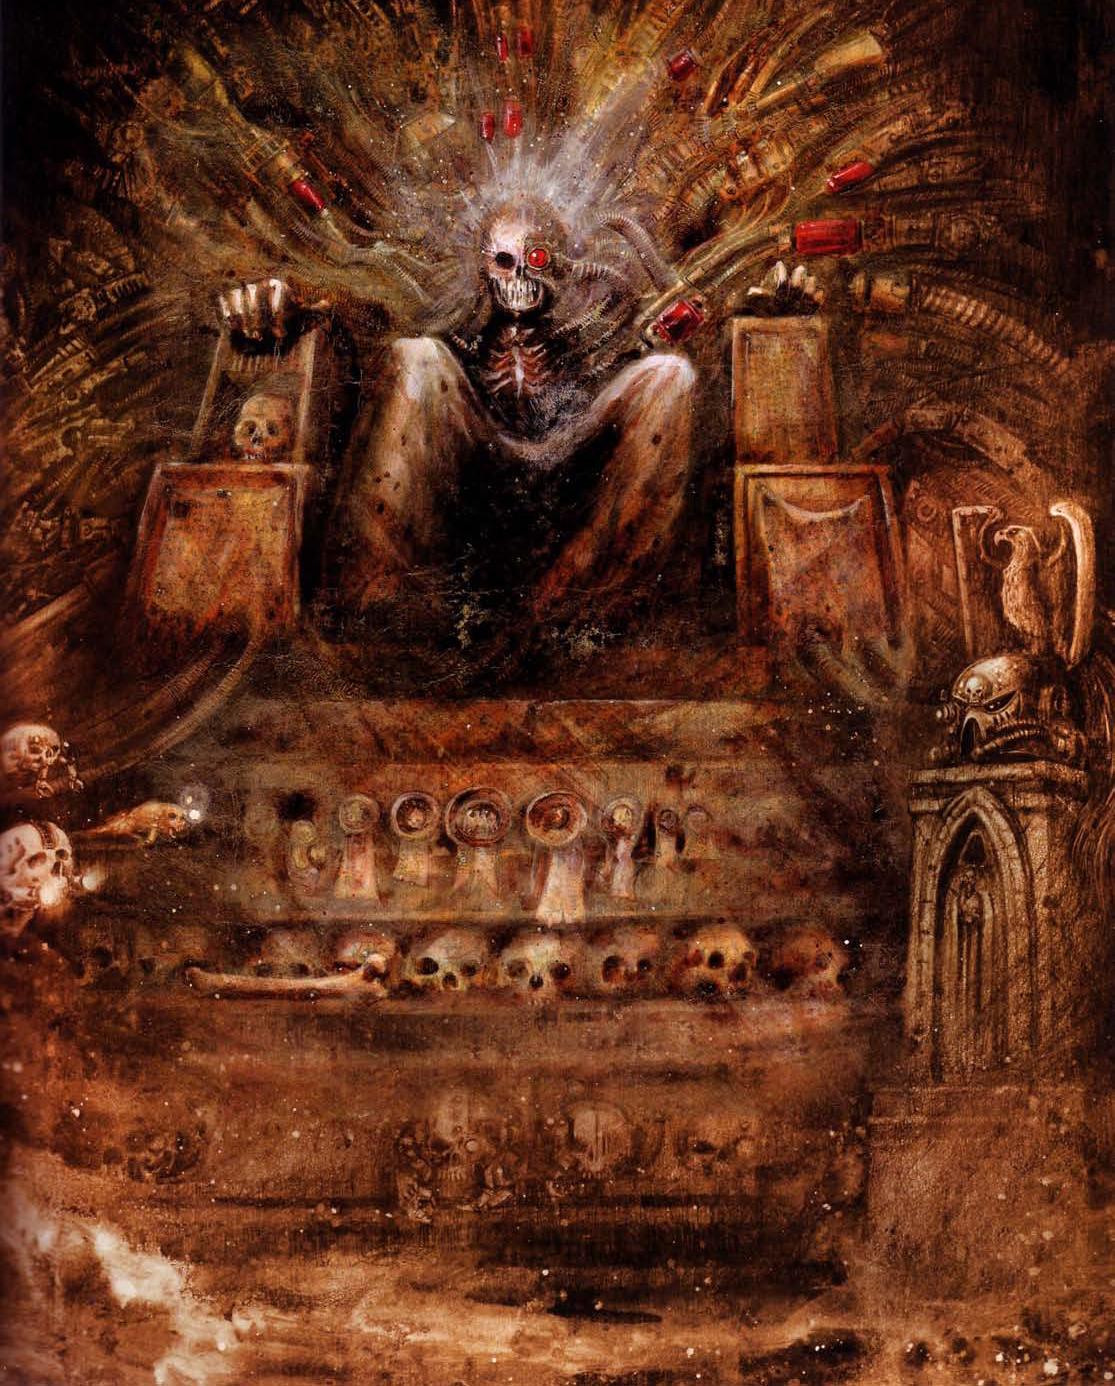 The God Emperor sitting on the Golden Throne image - Warhammer 40K Fan Grou...